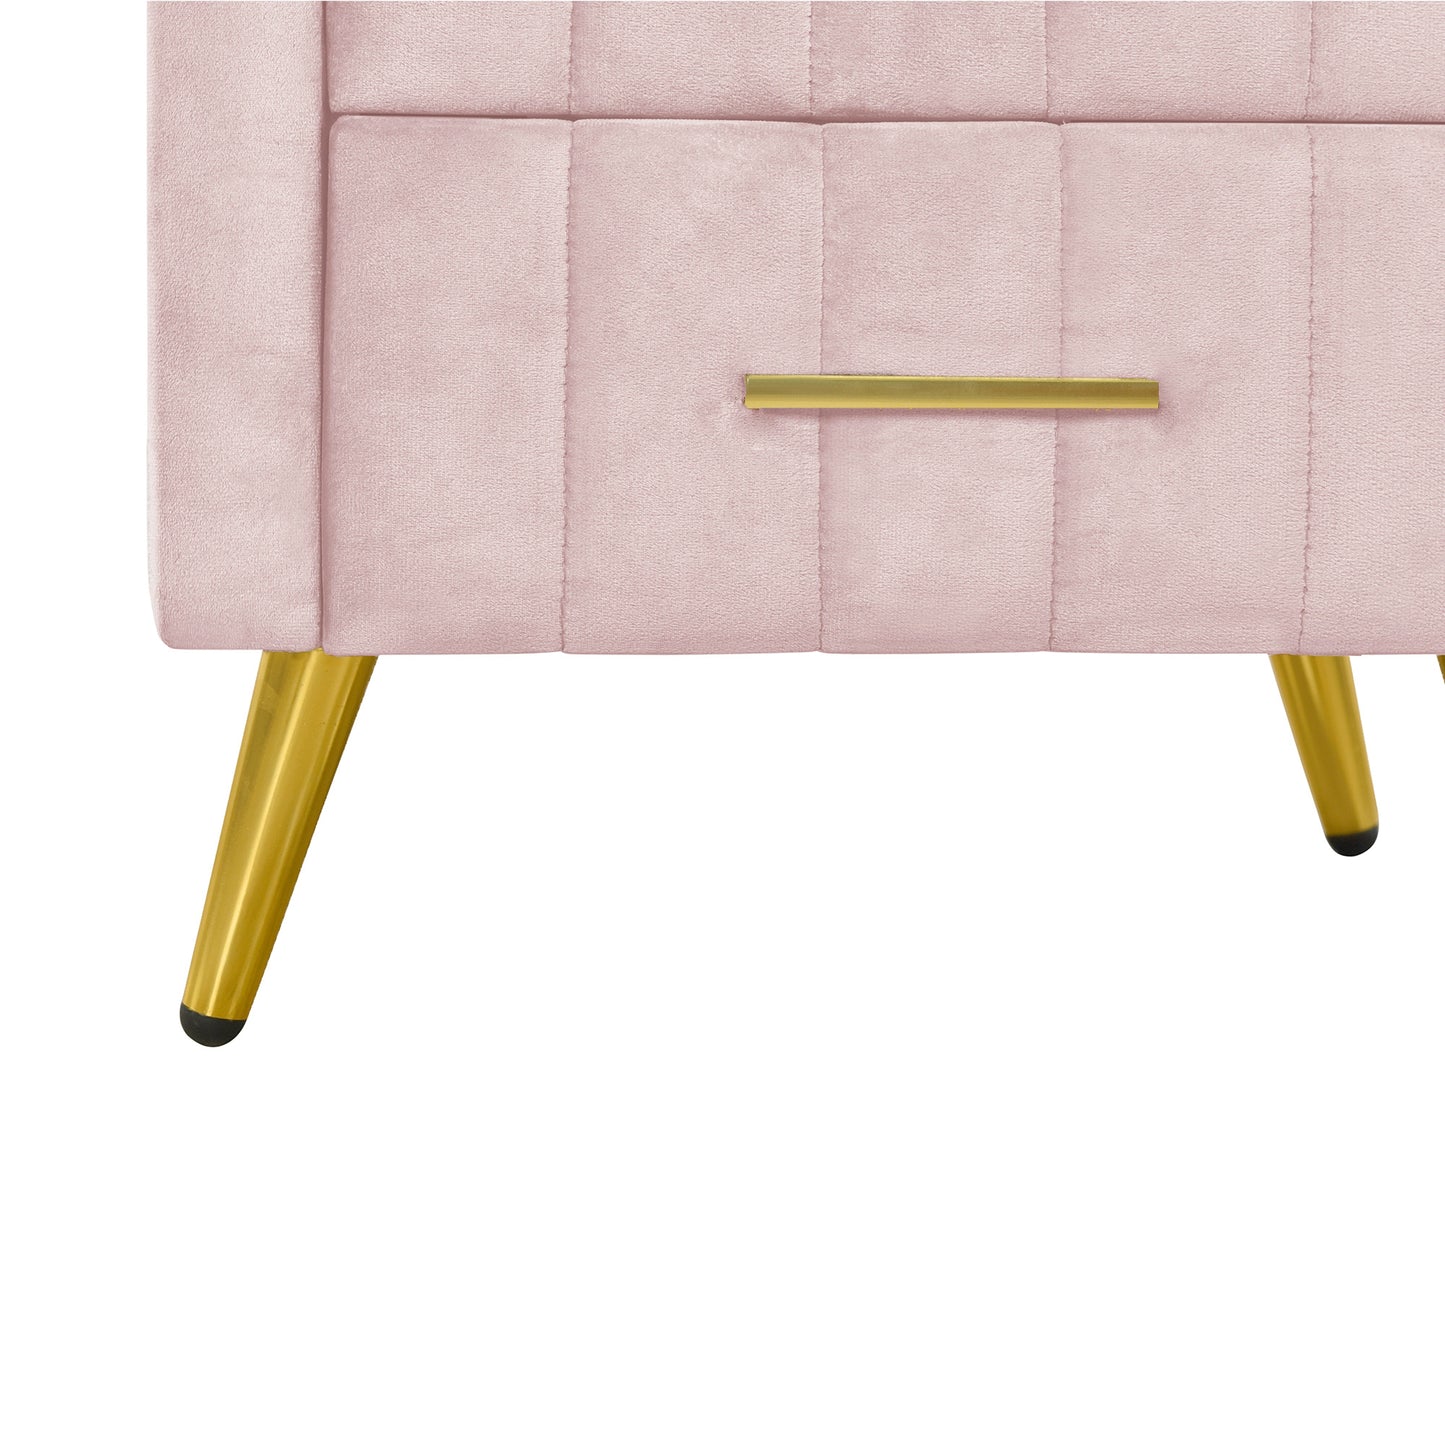 3-Pieces Bedroom Sets, Queen Size Upholstered Platform Bed with Two Nightstands, Nightstands with Marbling Worktop and Metal Legs&Handles, Velvet,Pink - Enova Luxe Home Store